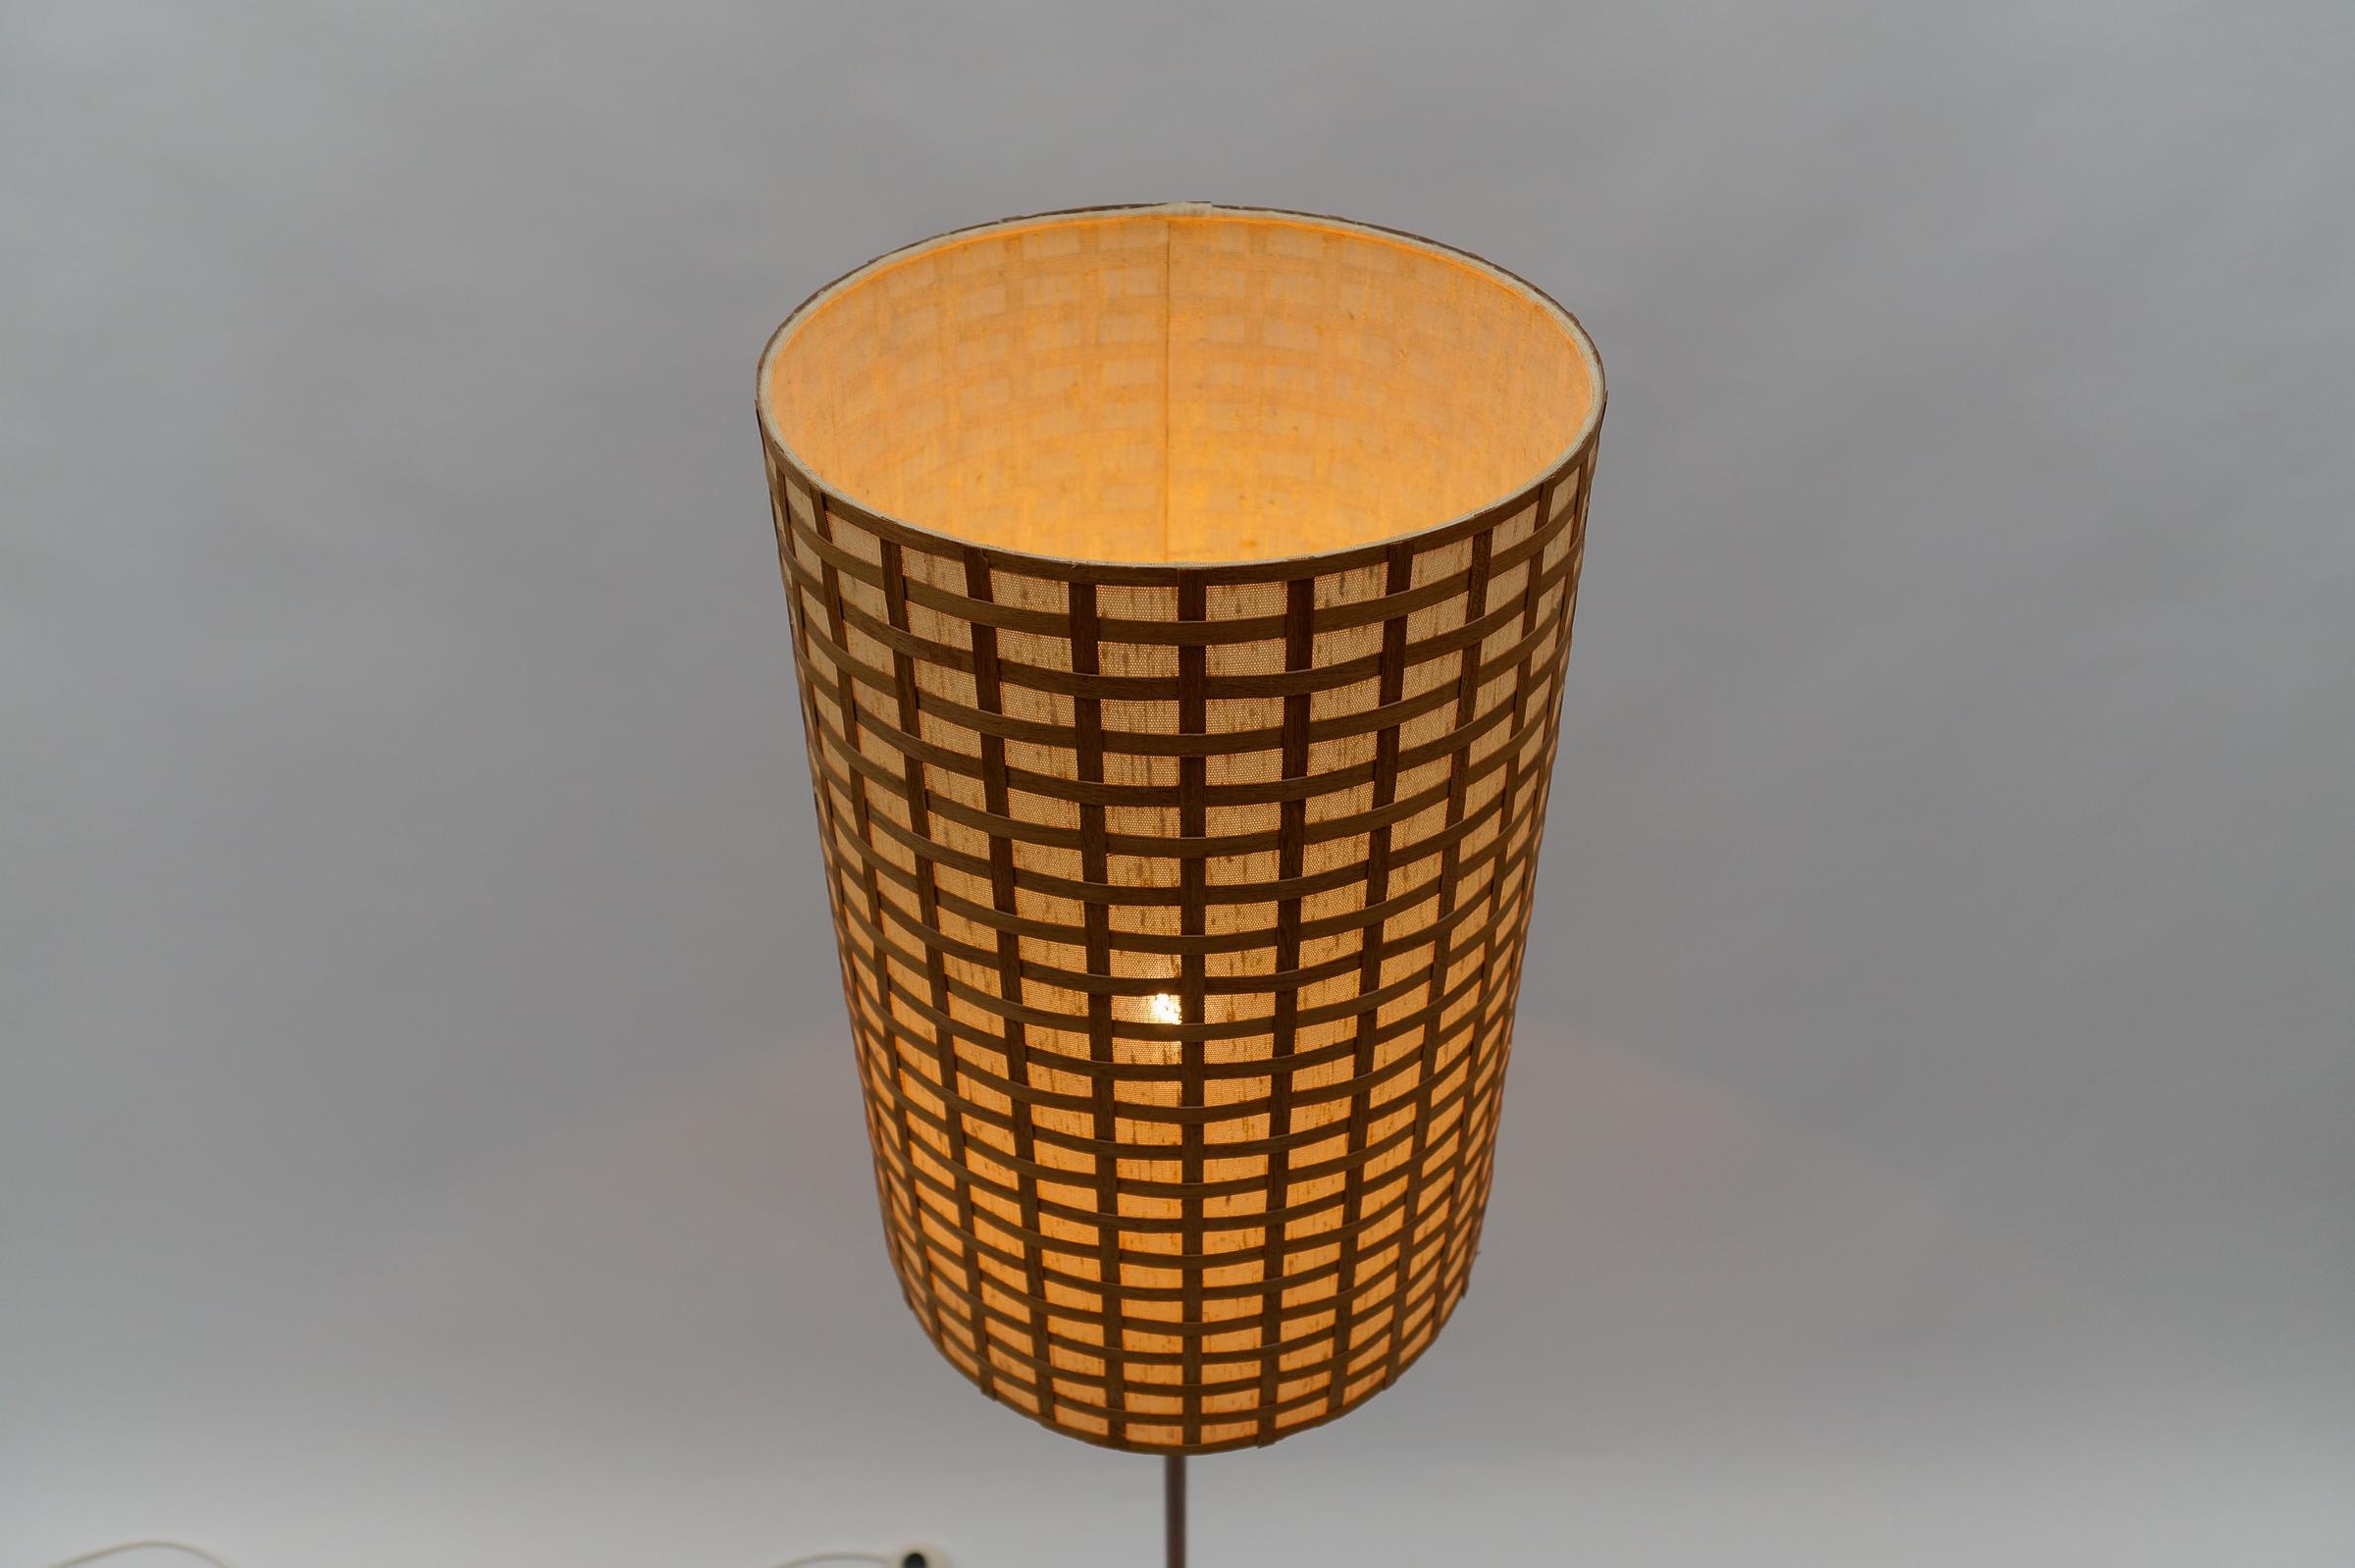  Mid-Century Modern Floor Lamp in Brass and Teak from Temde, 1960s Switzerland For Sale 2